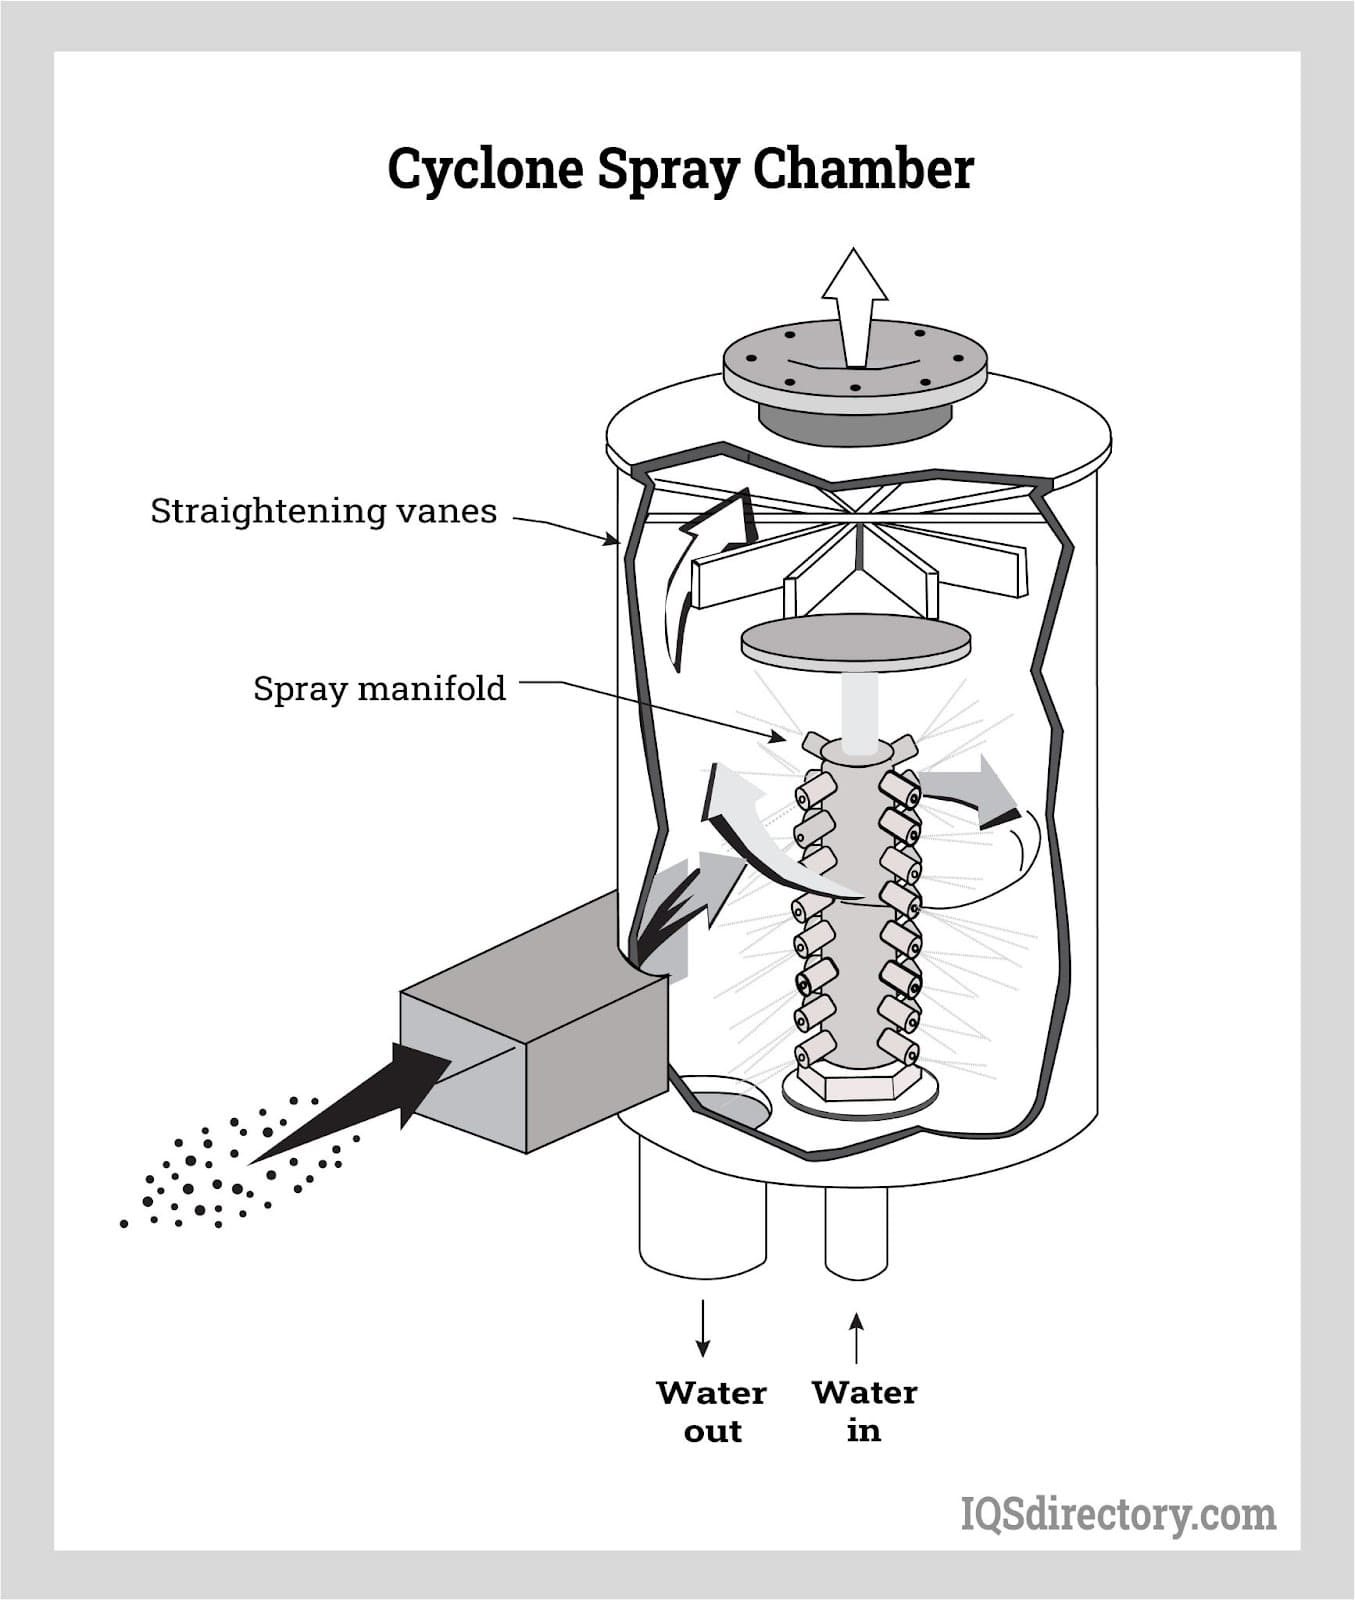 Cyclone Spray Chamber